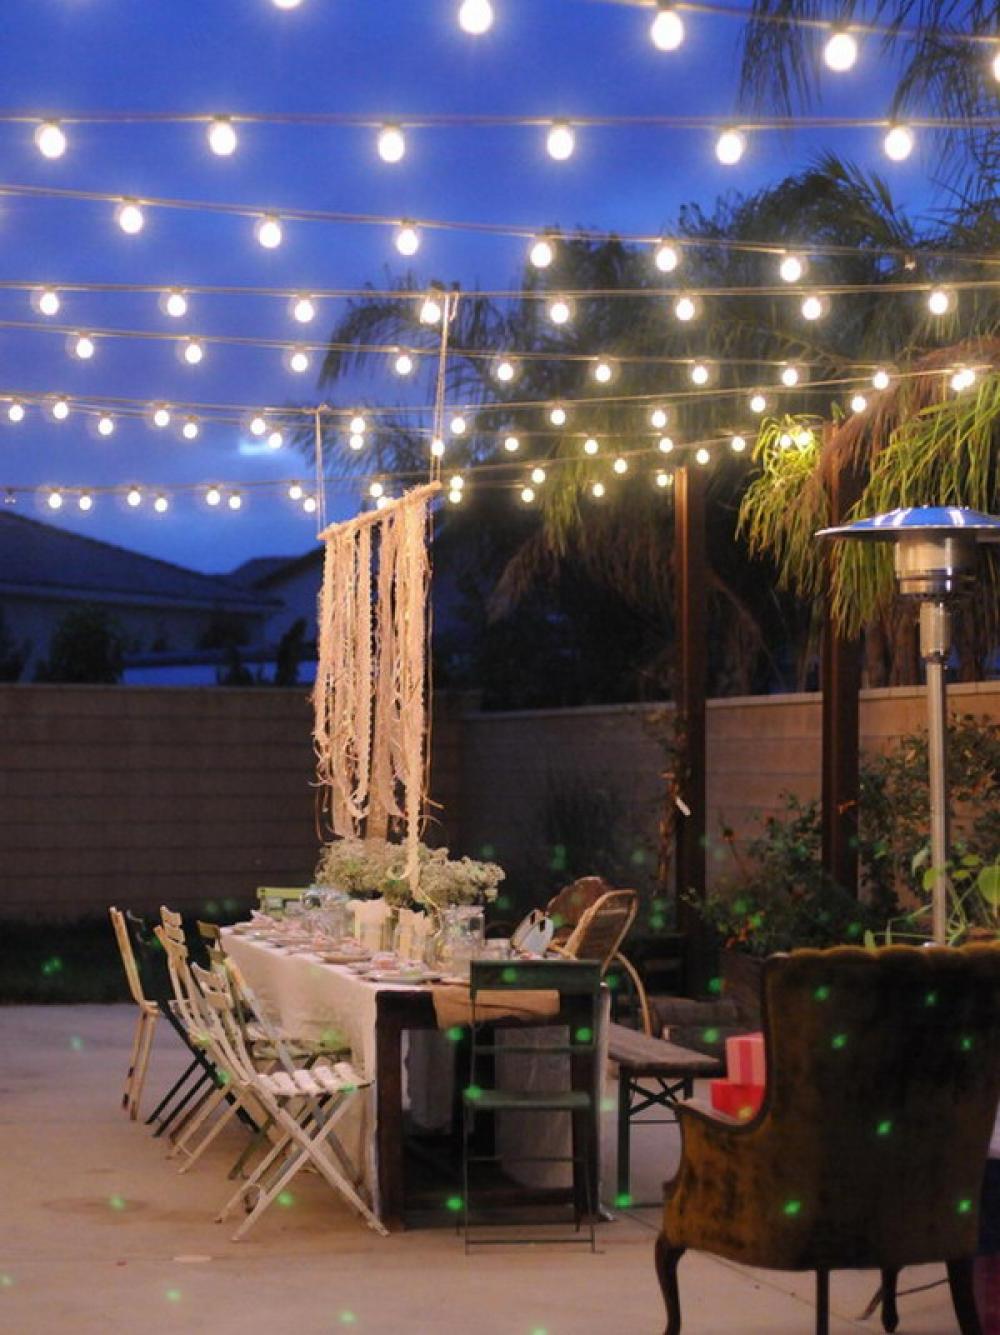 outdoor patio lights patio lights string ideas deck lighting ideas to hang patio lights white ZENCYWL